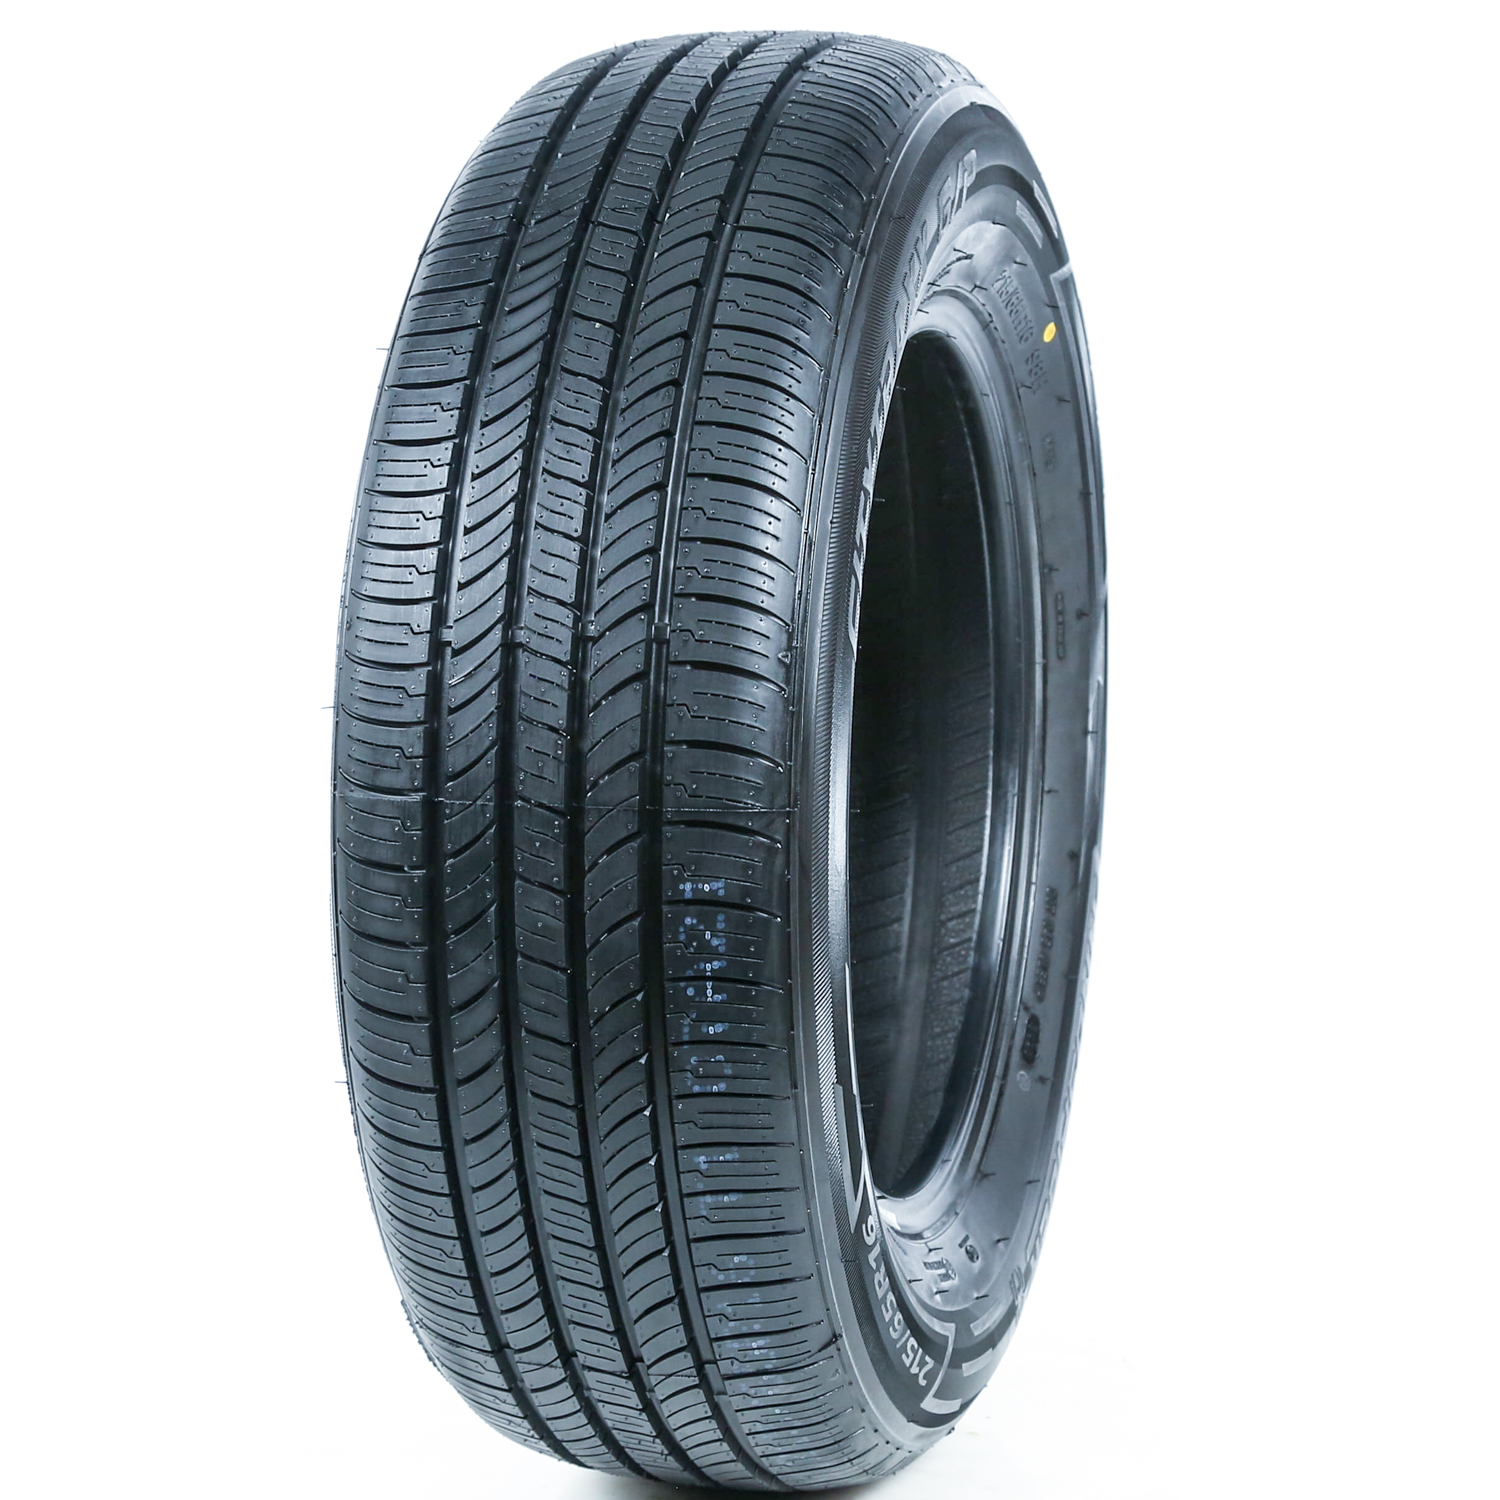 Landspider Citytraxx G/P 215/65R16 98H A/S Performance Tire 